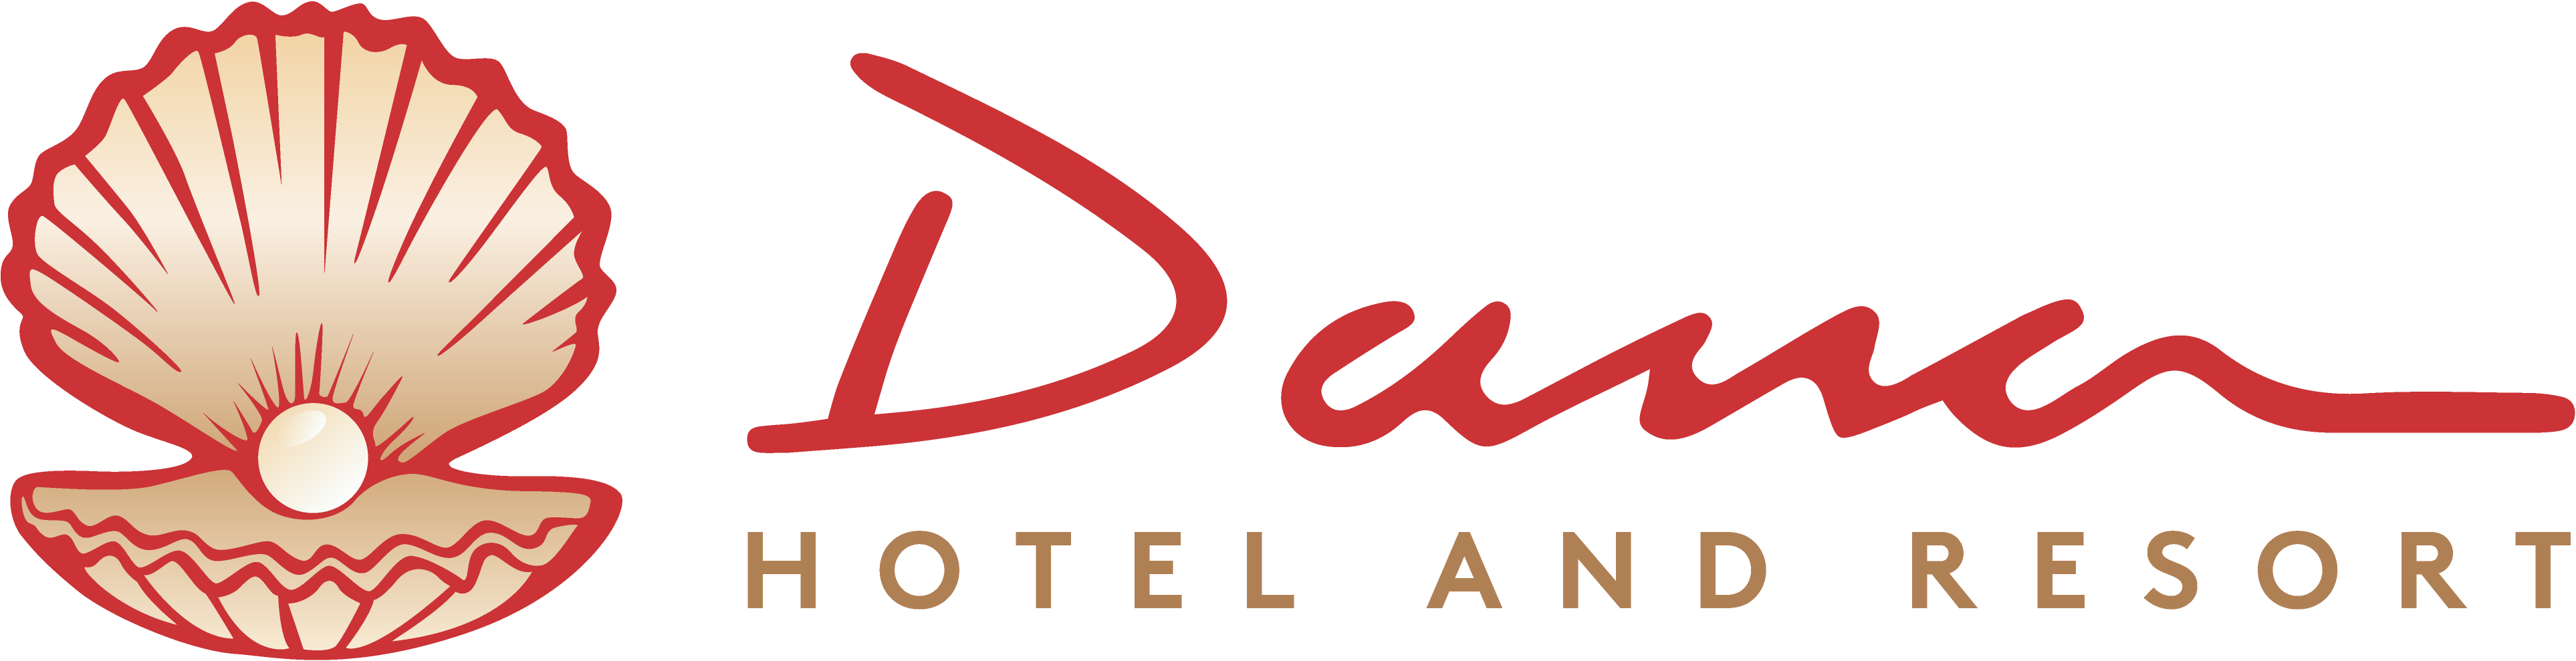 Dana Hotel